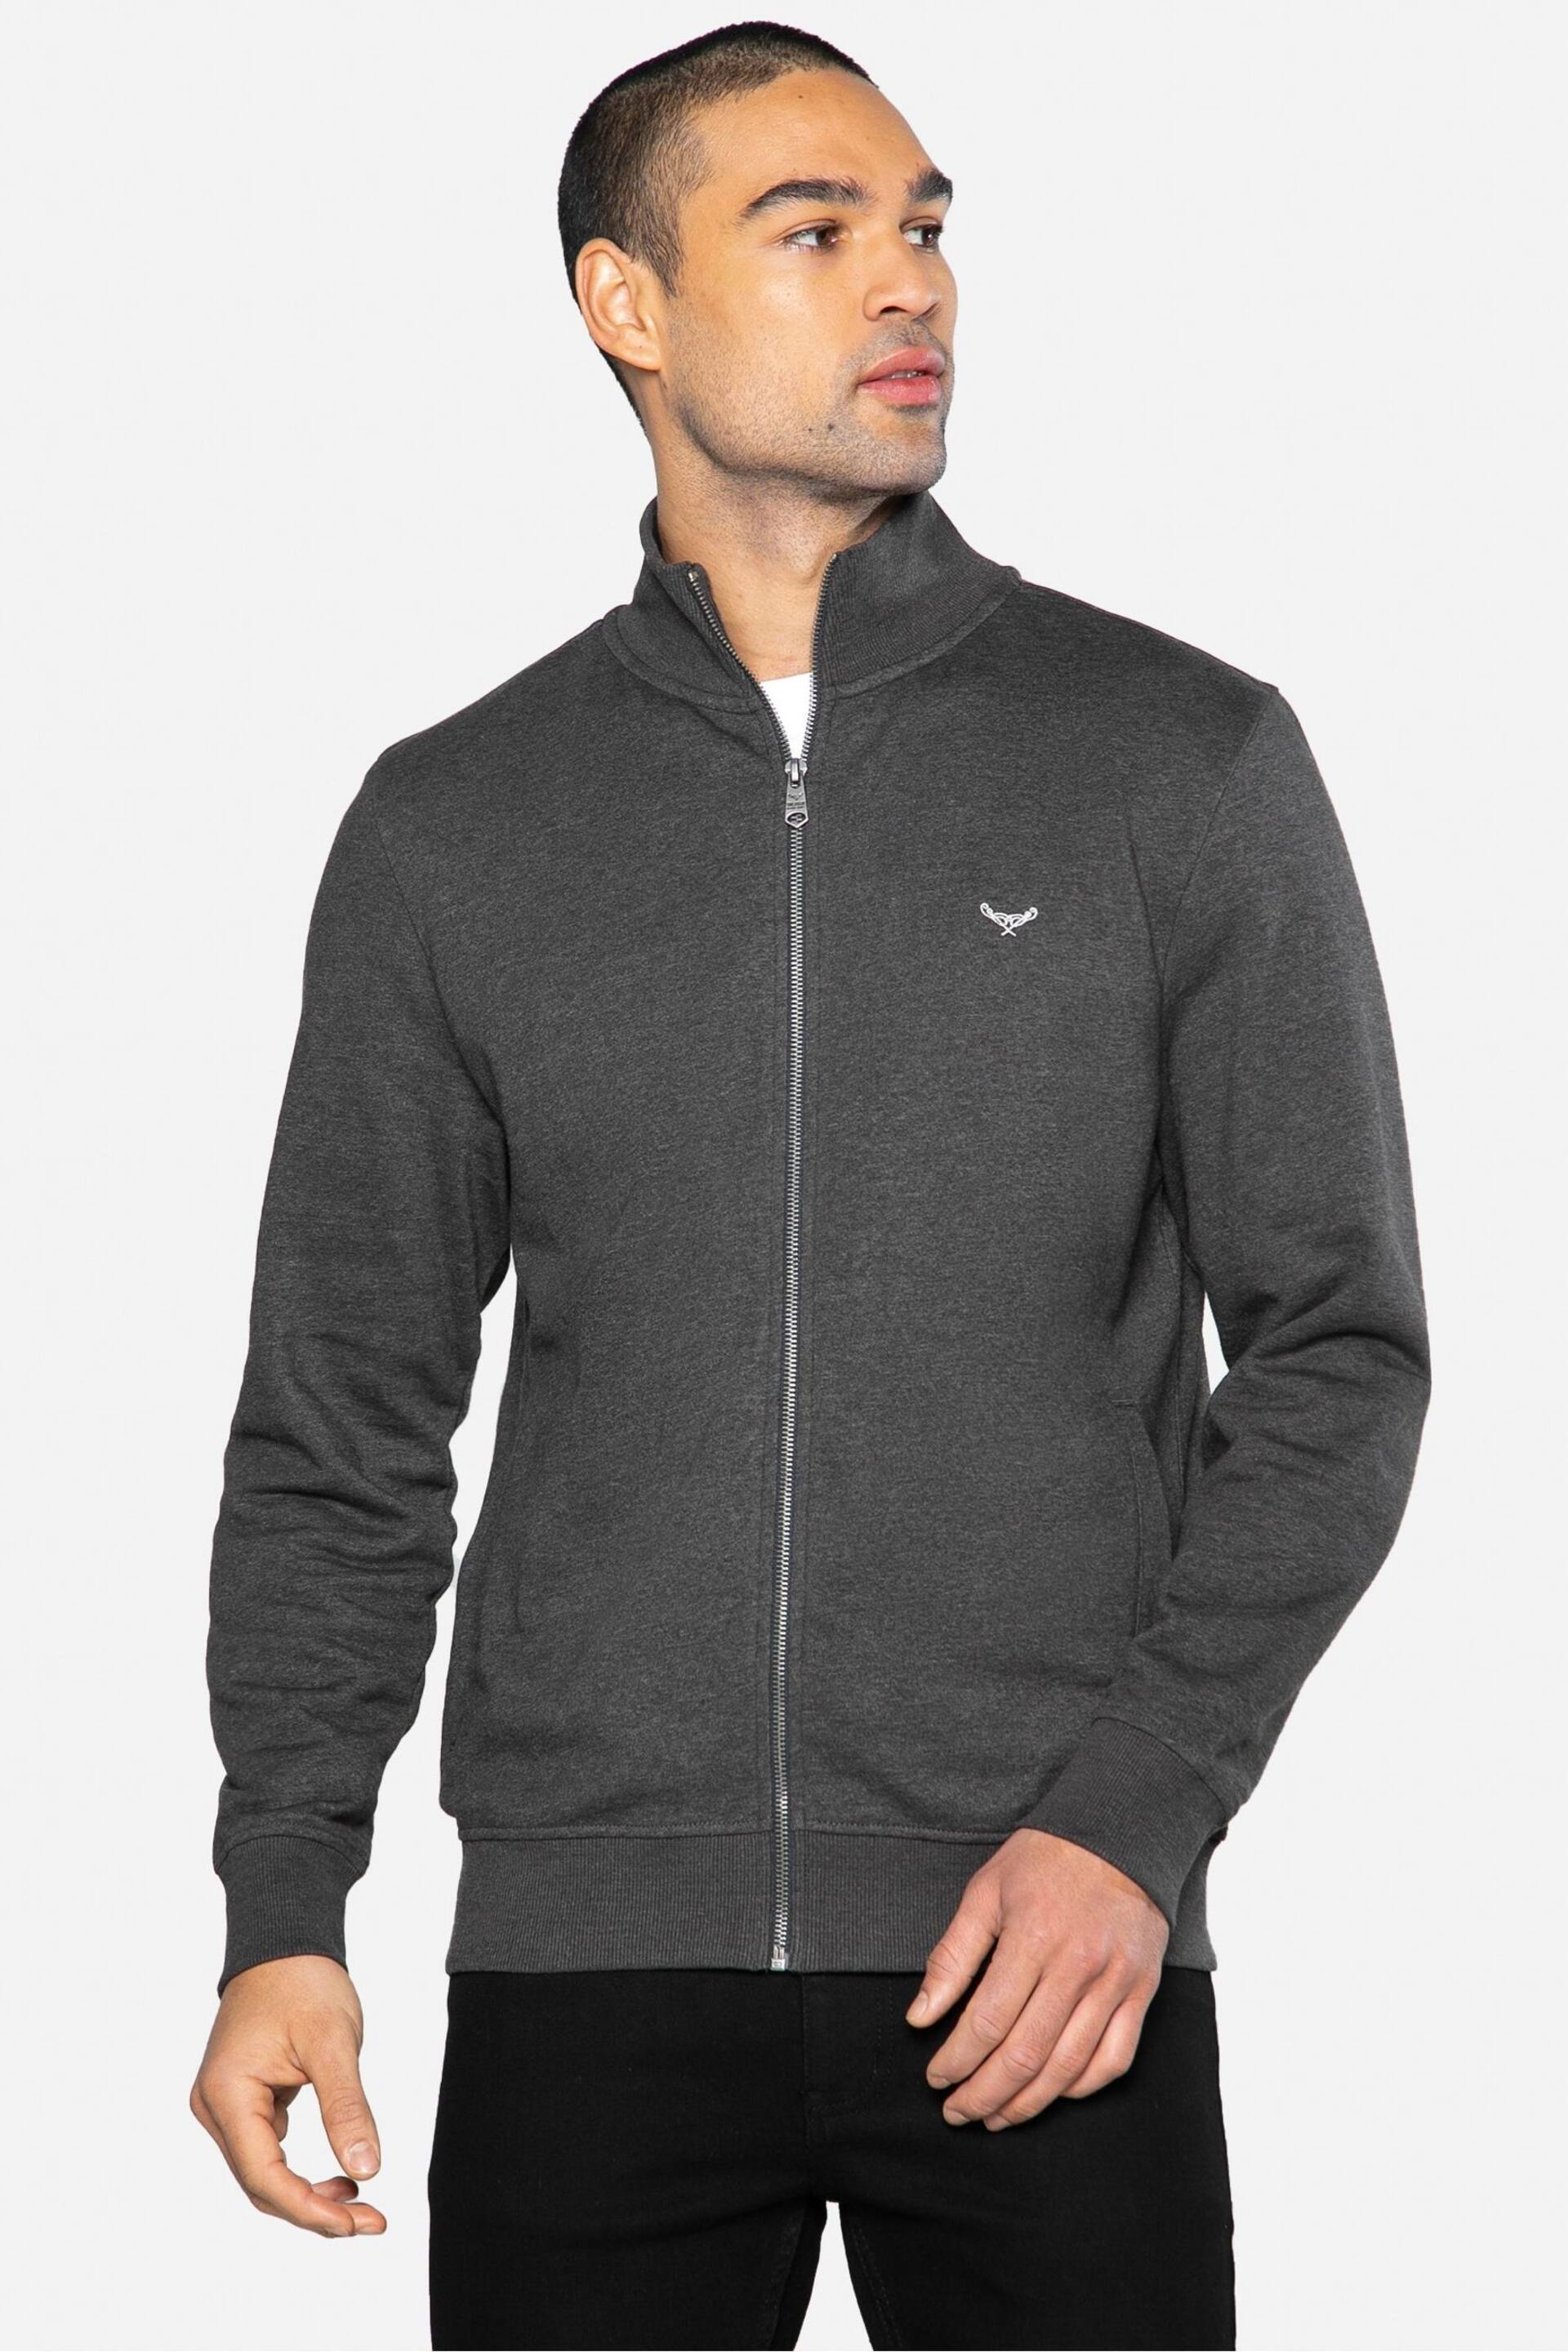 Threadbare Grey Zip Through Fleece Sweatshirt - Image 1 of 5